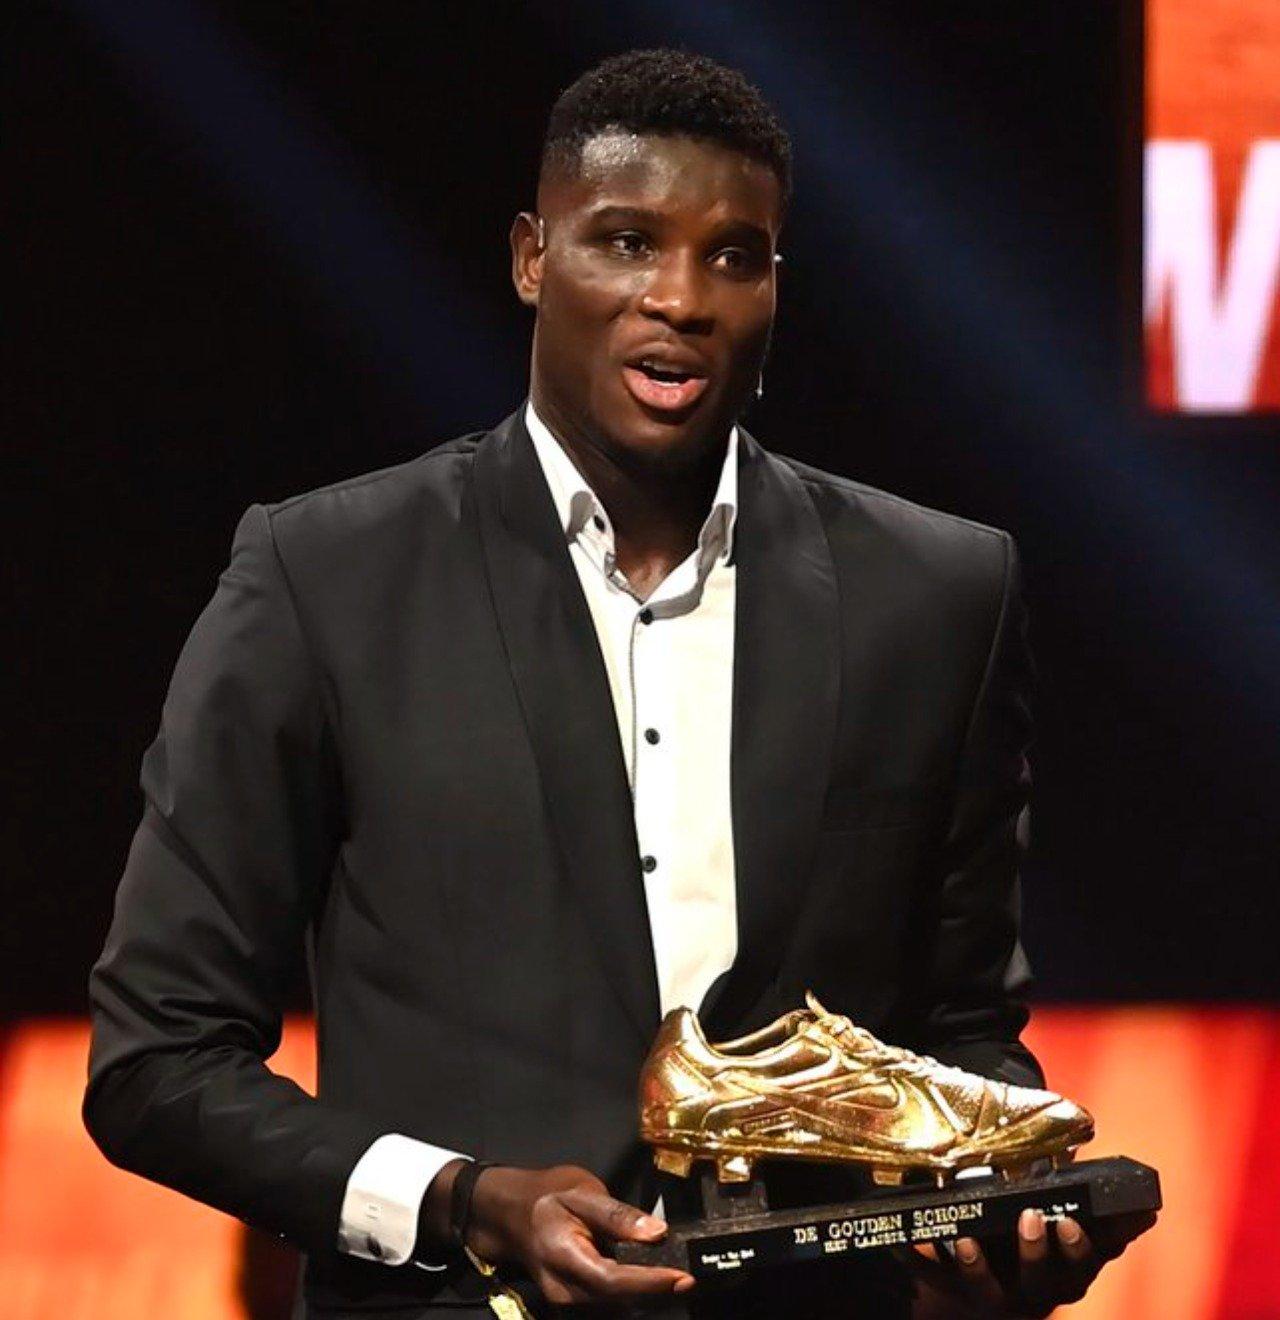 Nigerian striker wins Golden Shoe award